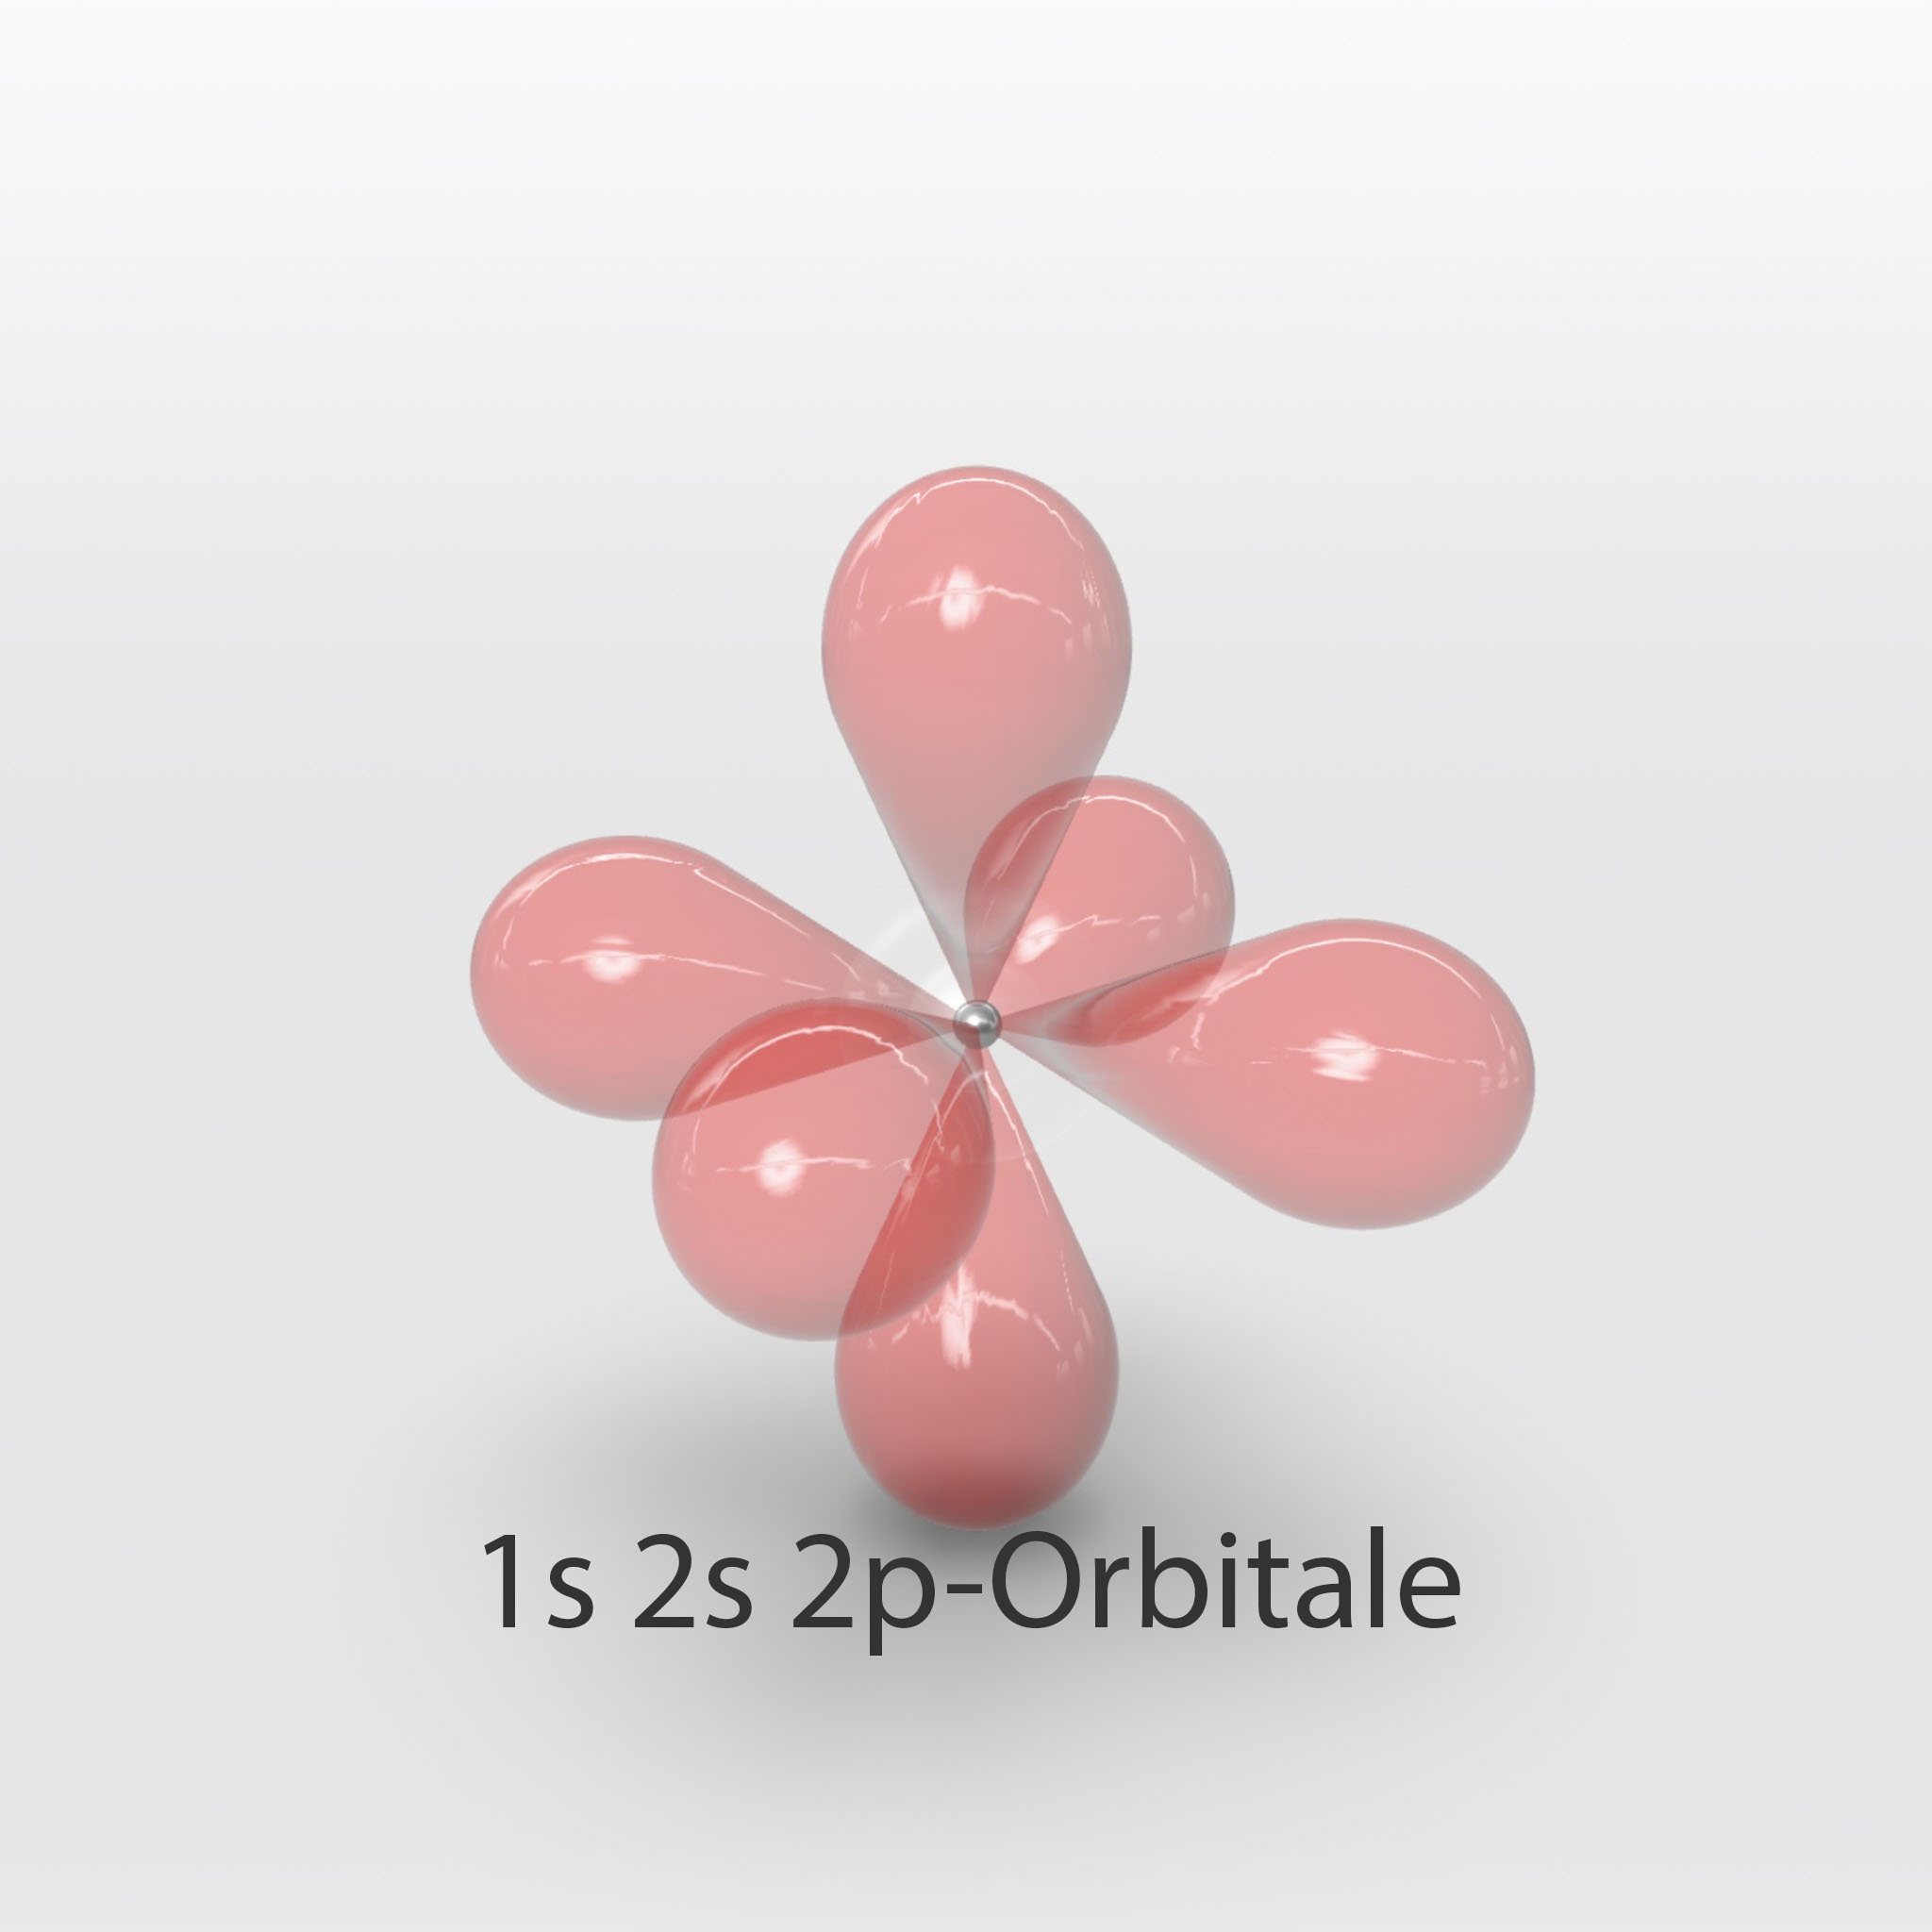 1s2s2p-Orbitale